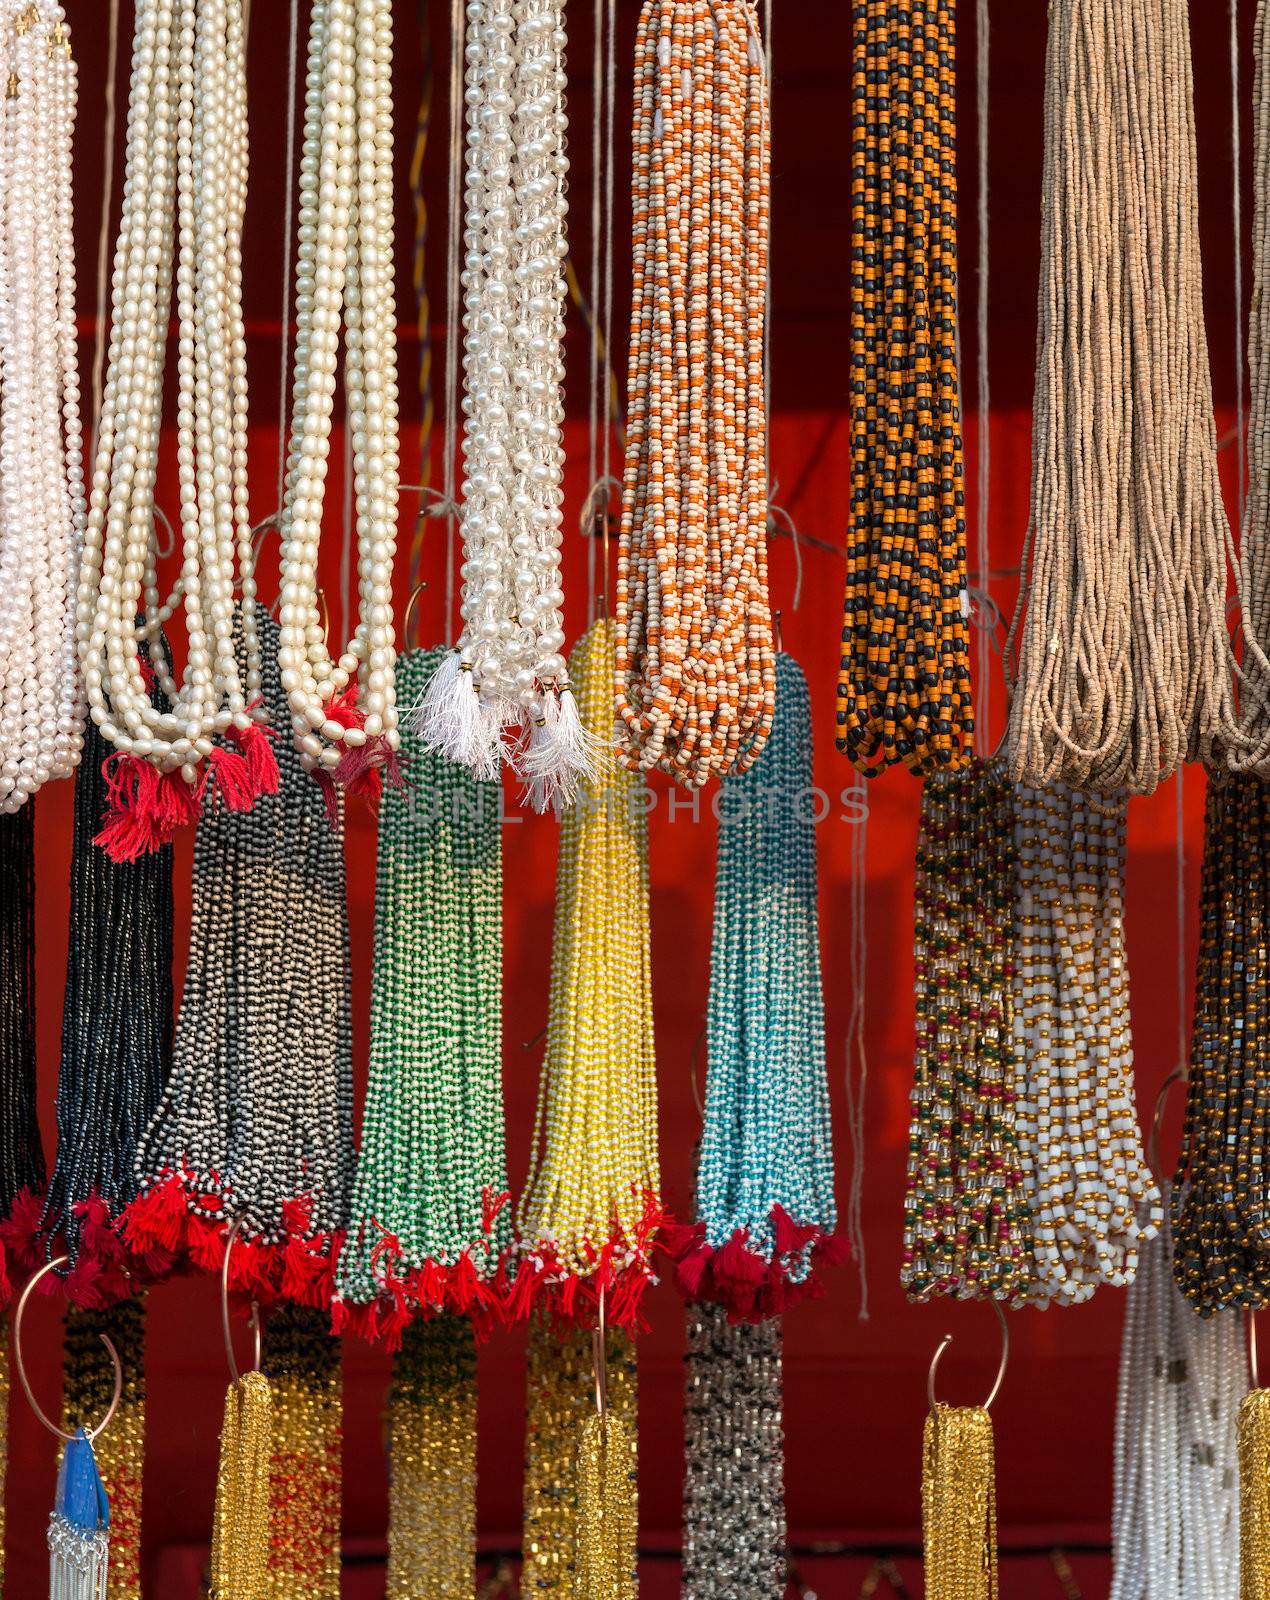 Beads at the open market by iryna_rasko